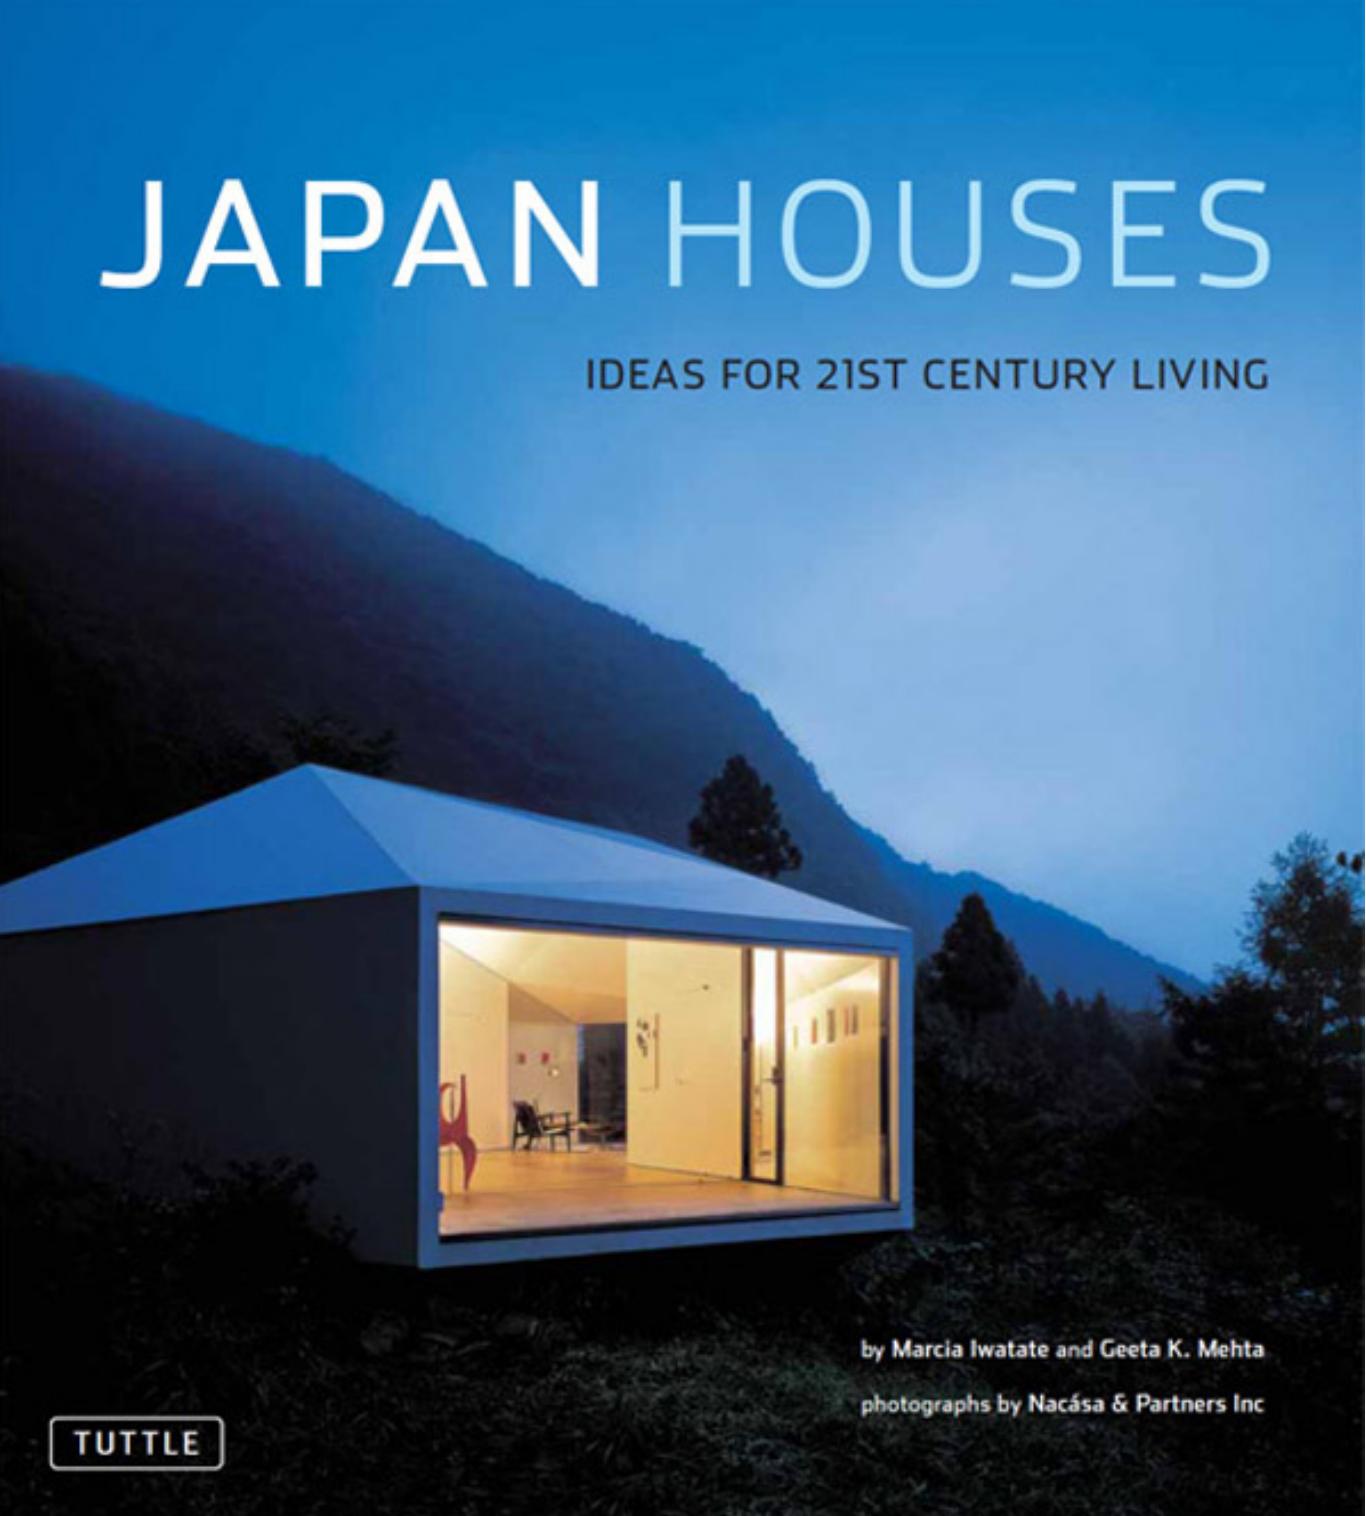 Japan Houses by Marcia Iwatate & Geeta K. Mehta